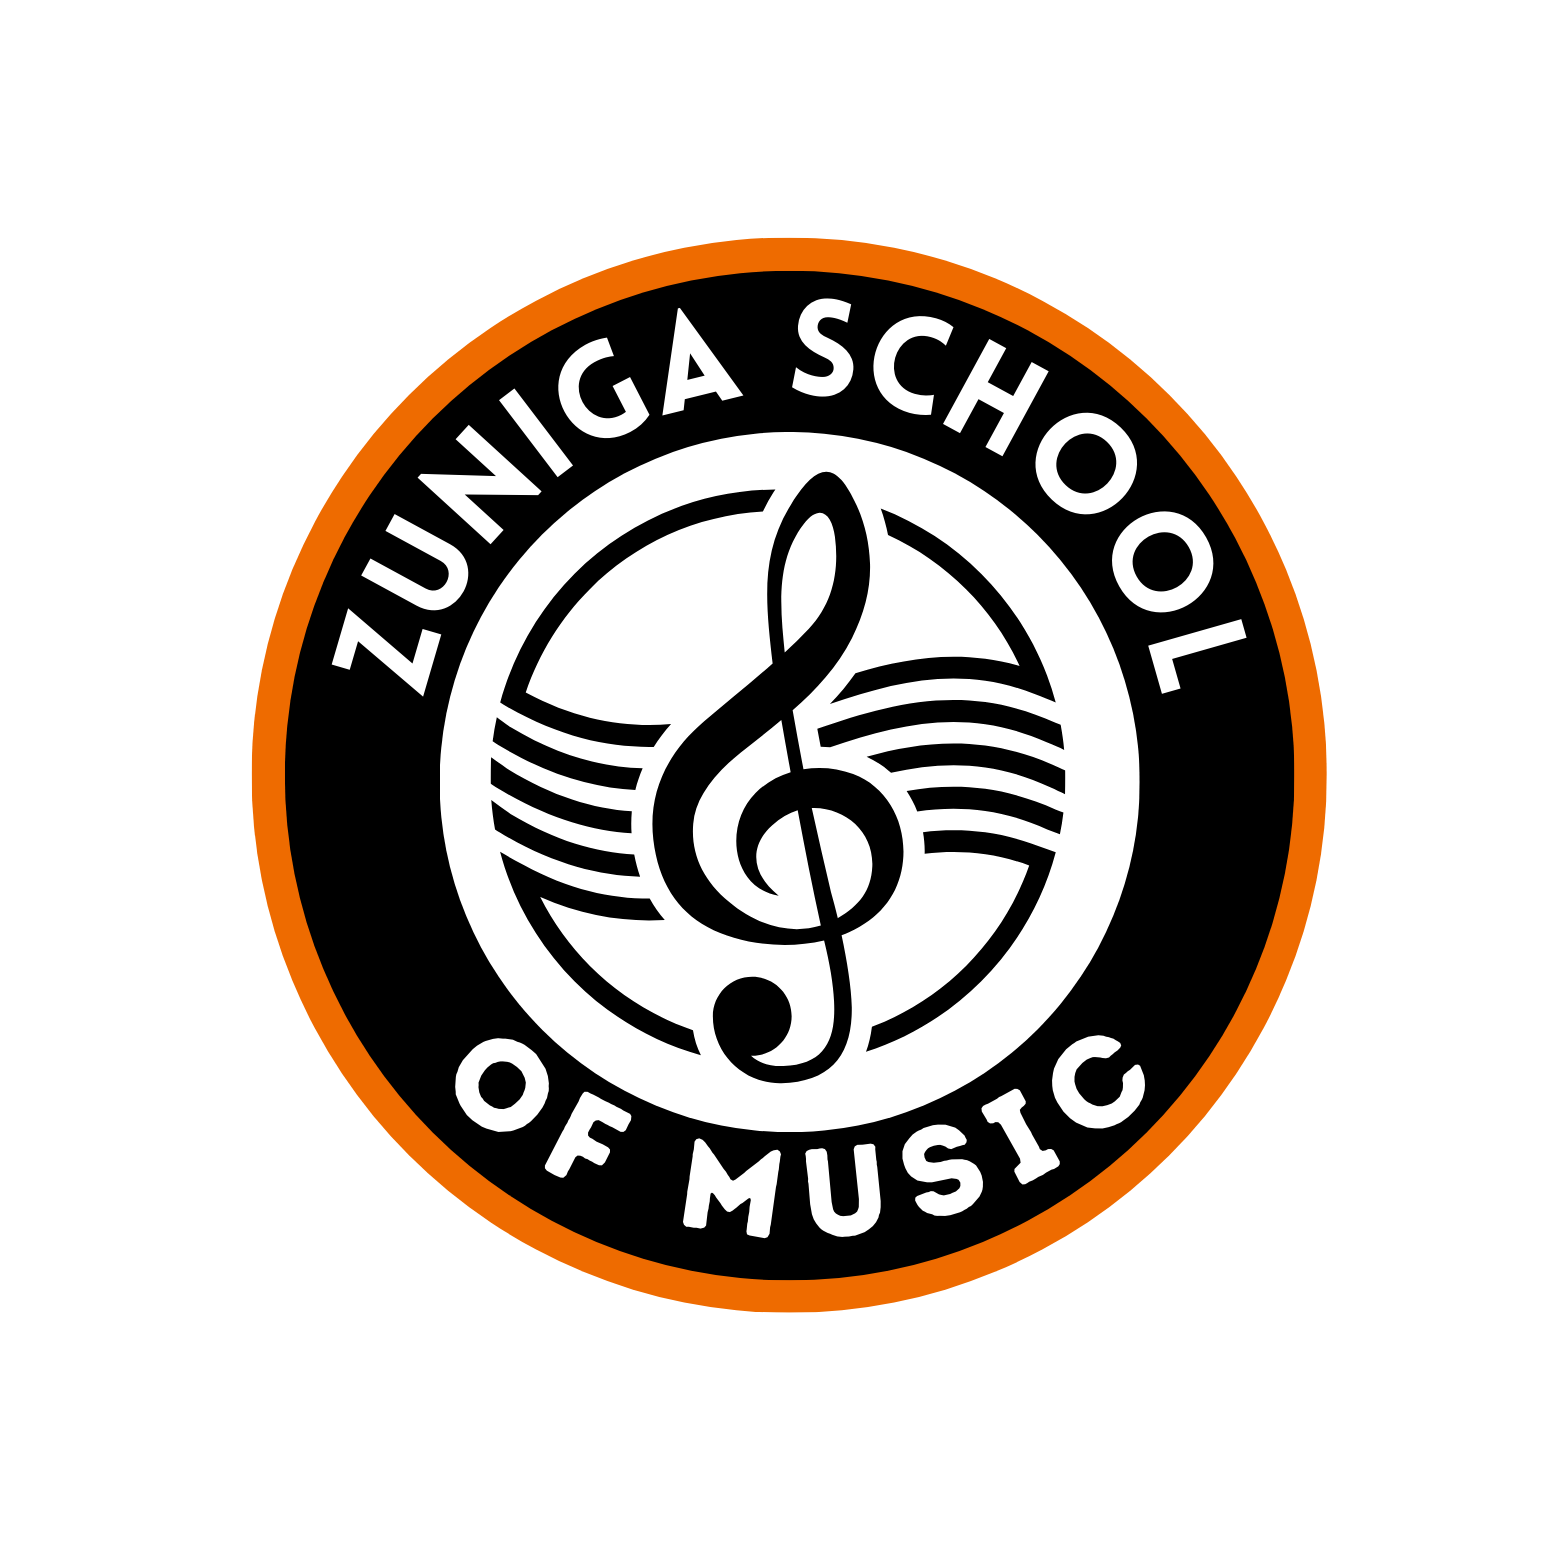 Zuniga School of Music